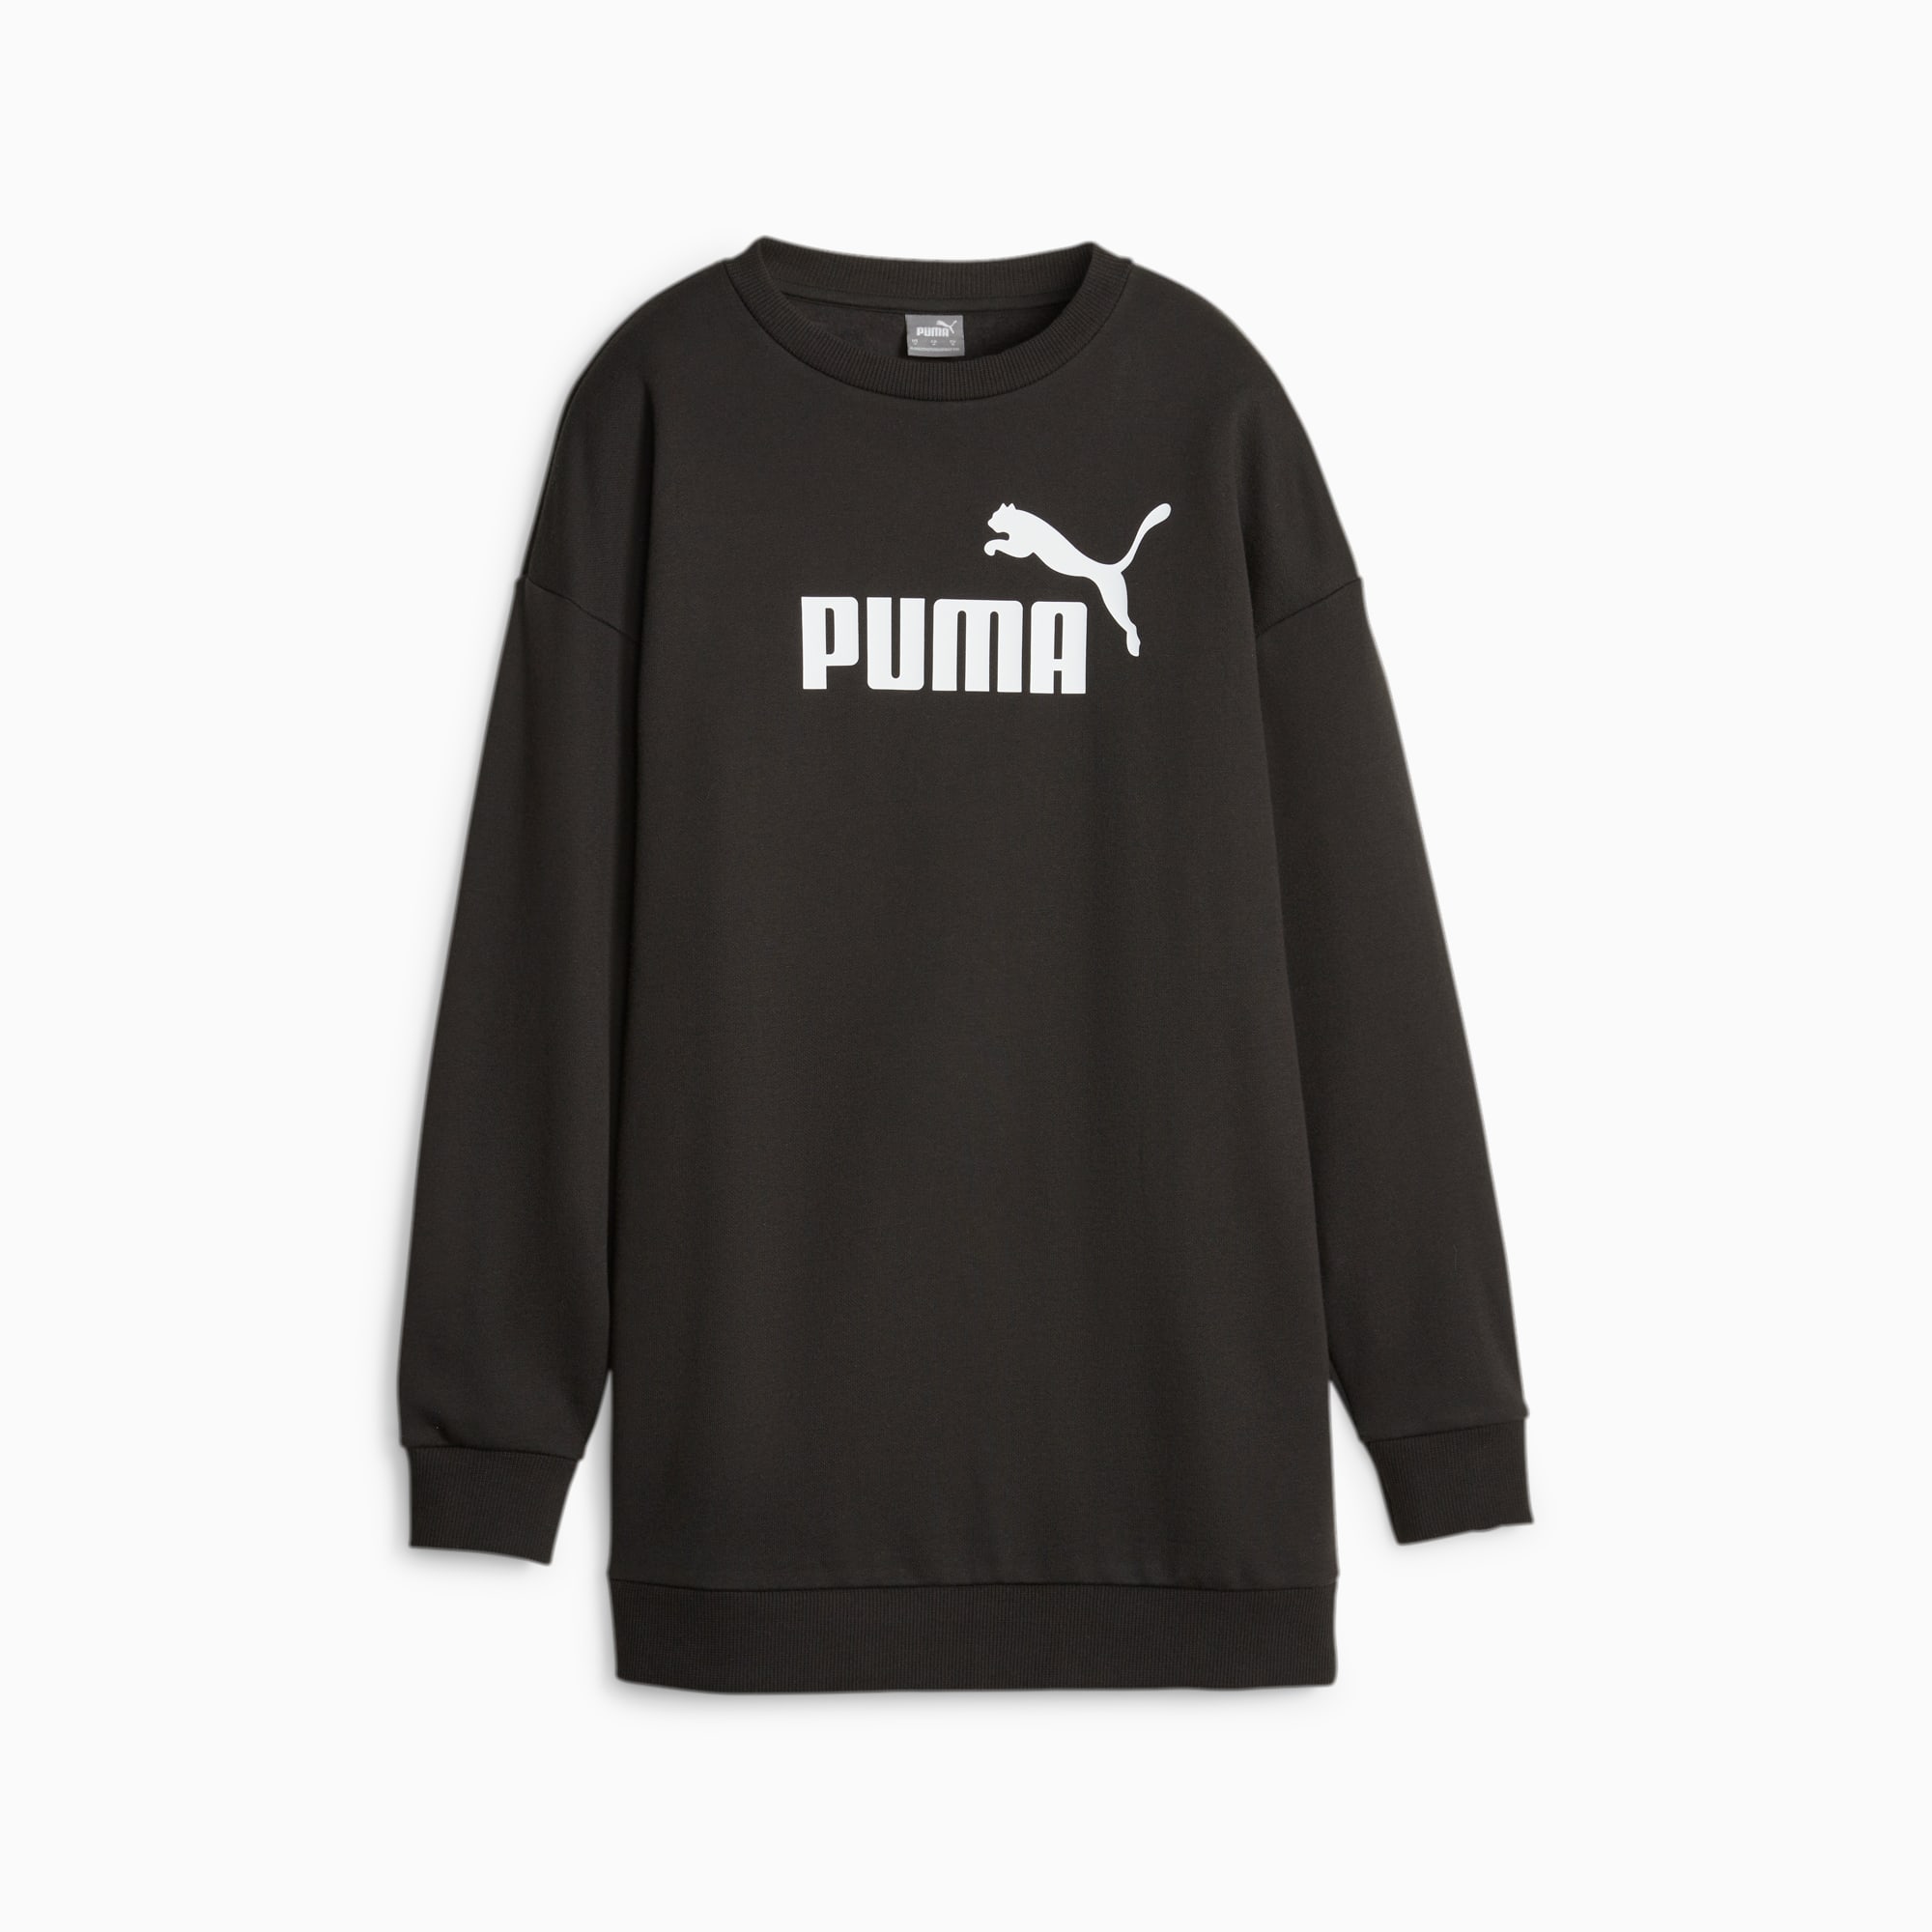 PUMA Ess+ Women's Crew Shirt Dress, Black, Size XS, Clothing